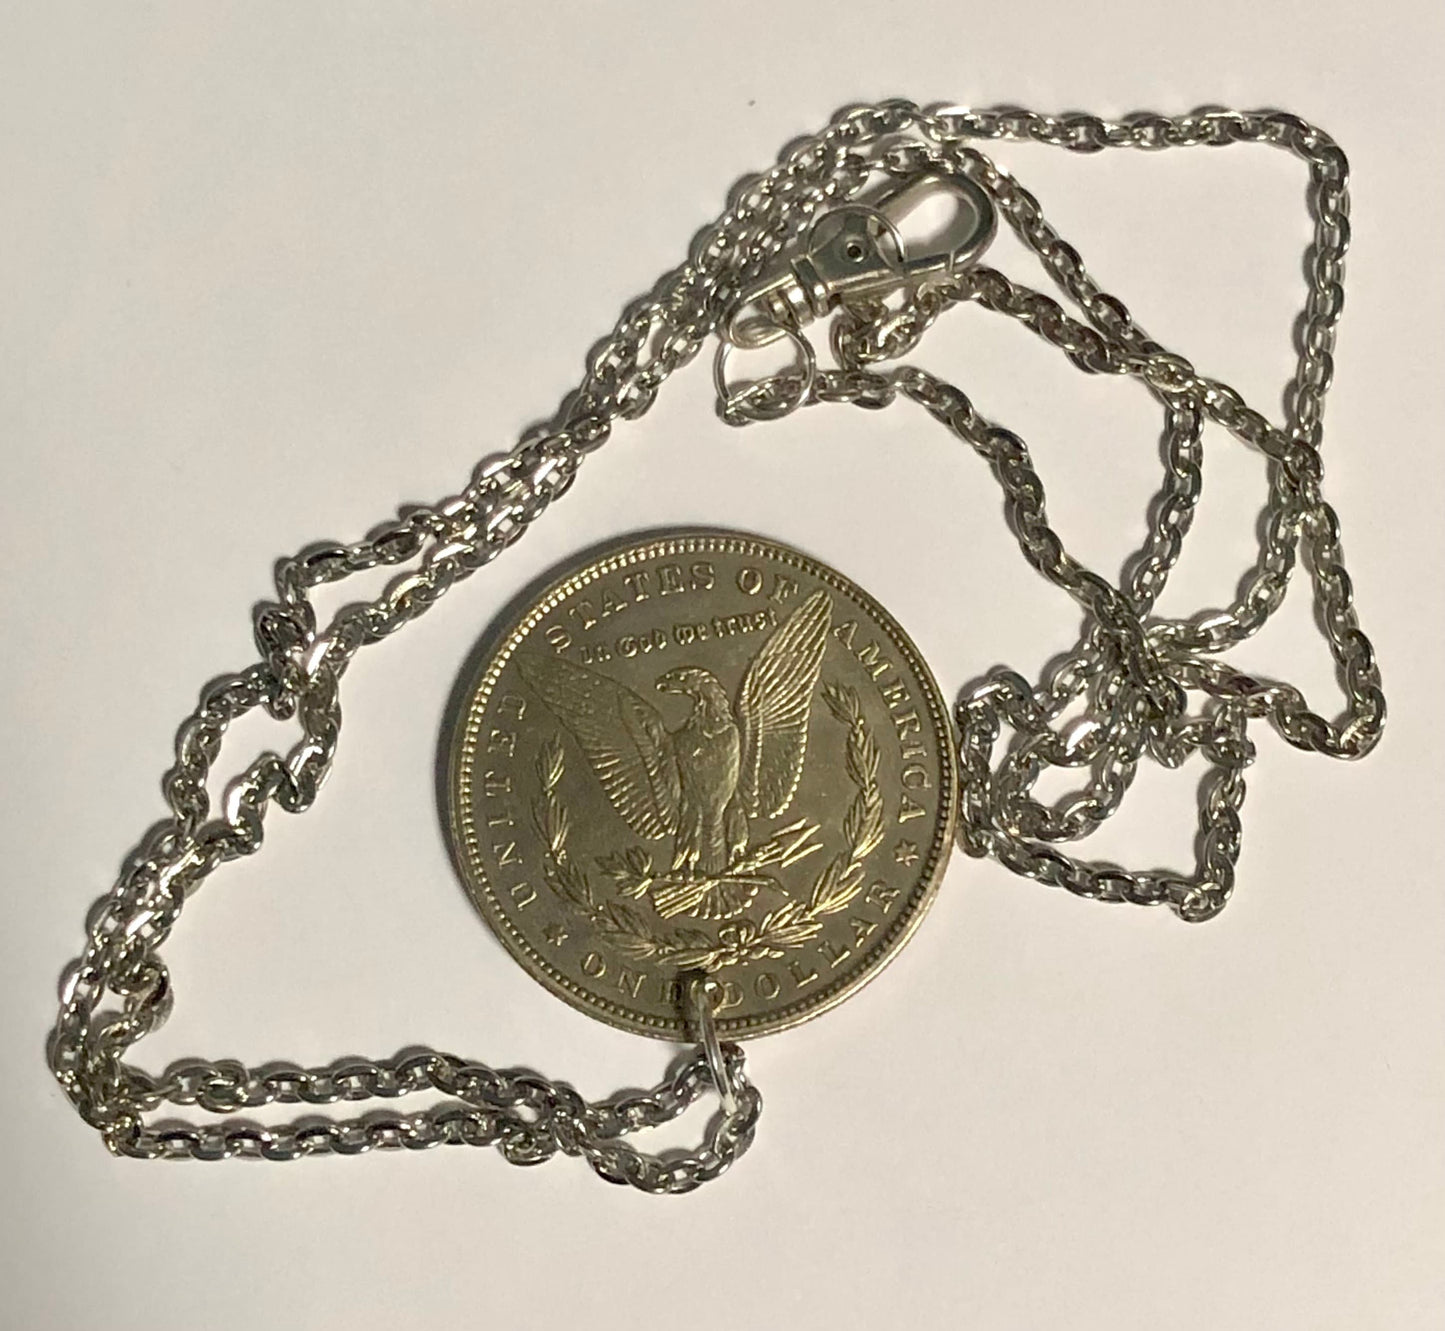 Anime Girl Splits Medallion Coin Pendant Necklace Custom Made Vintage Novelty Coins USA Morgan Dollar Eagle - Coin Enthusiast